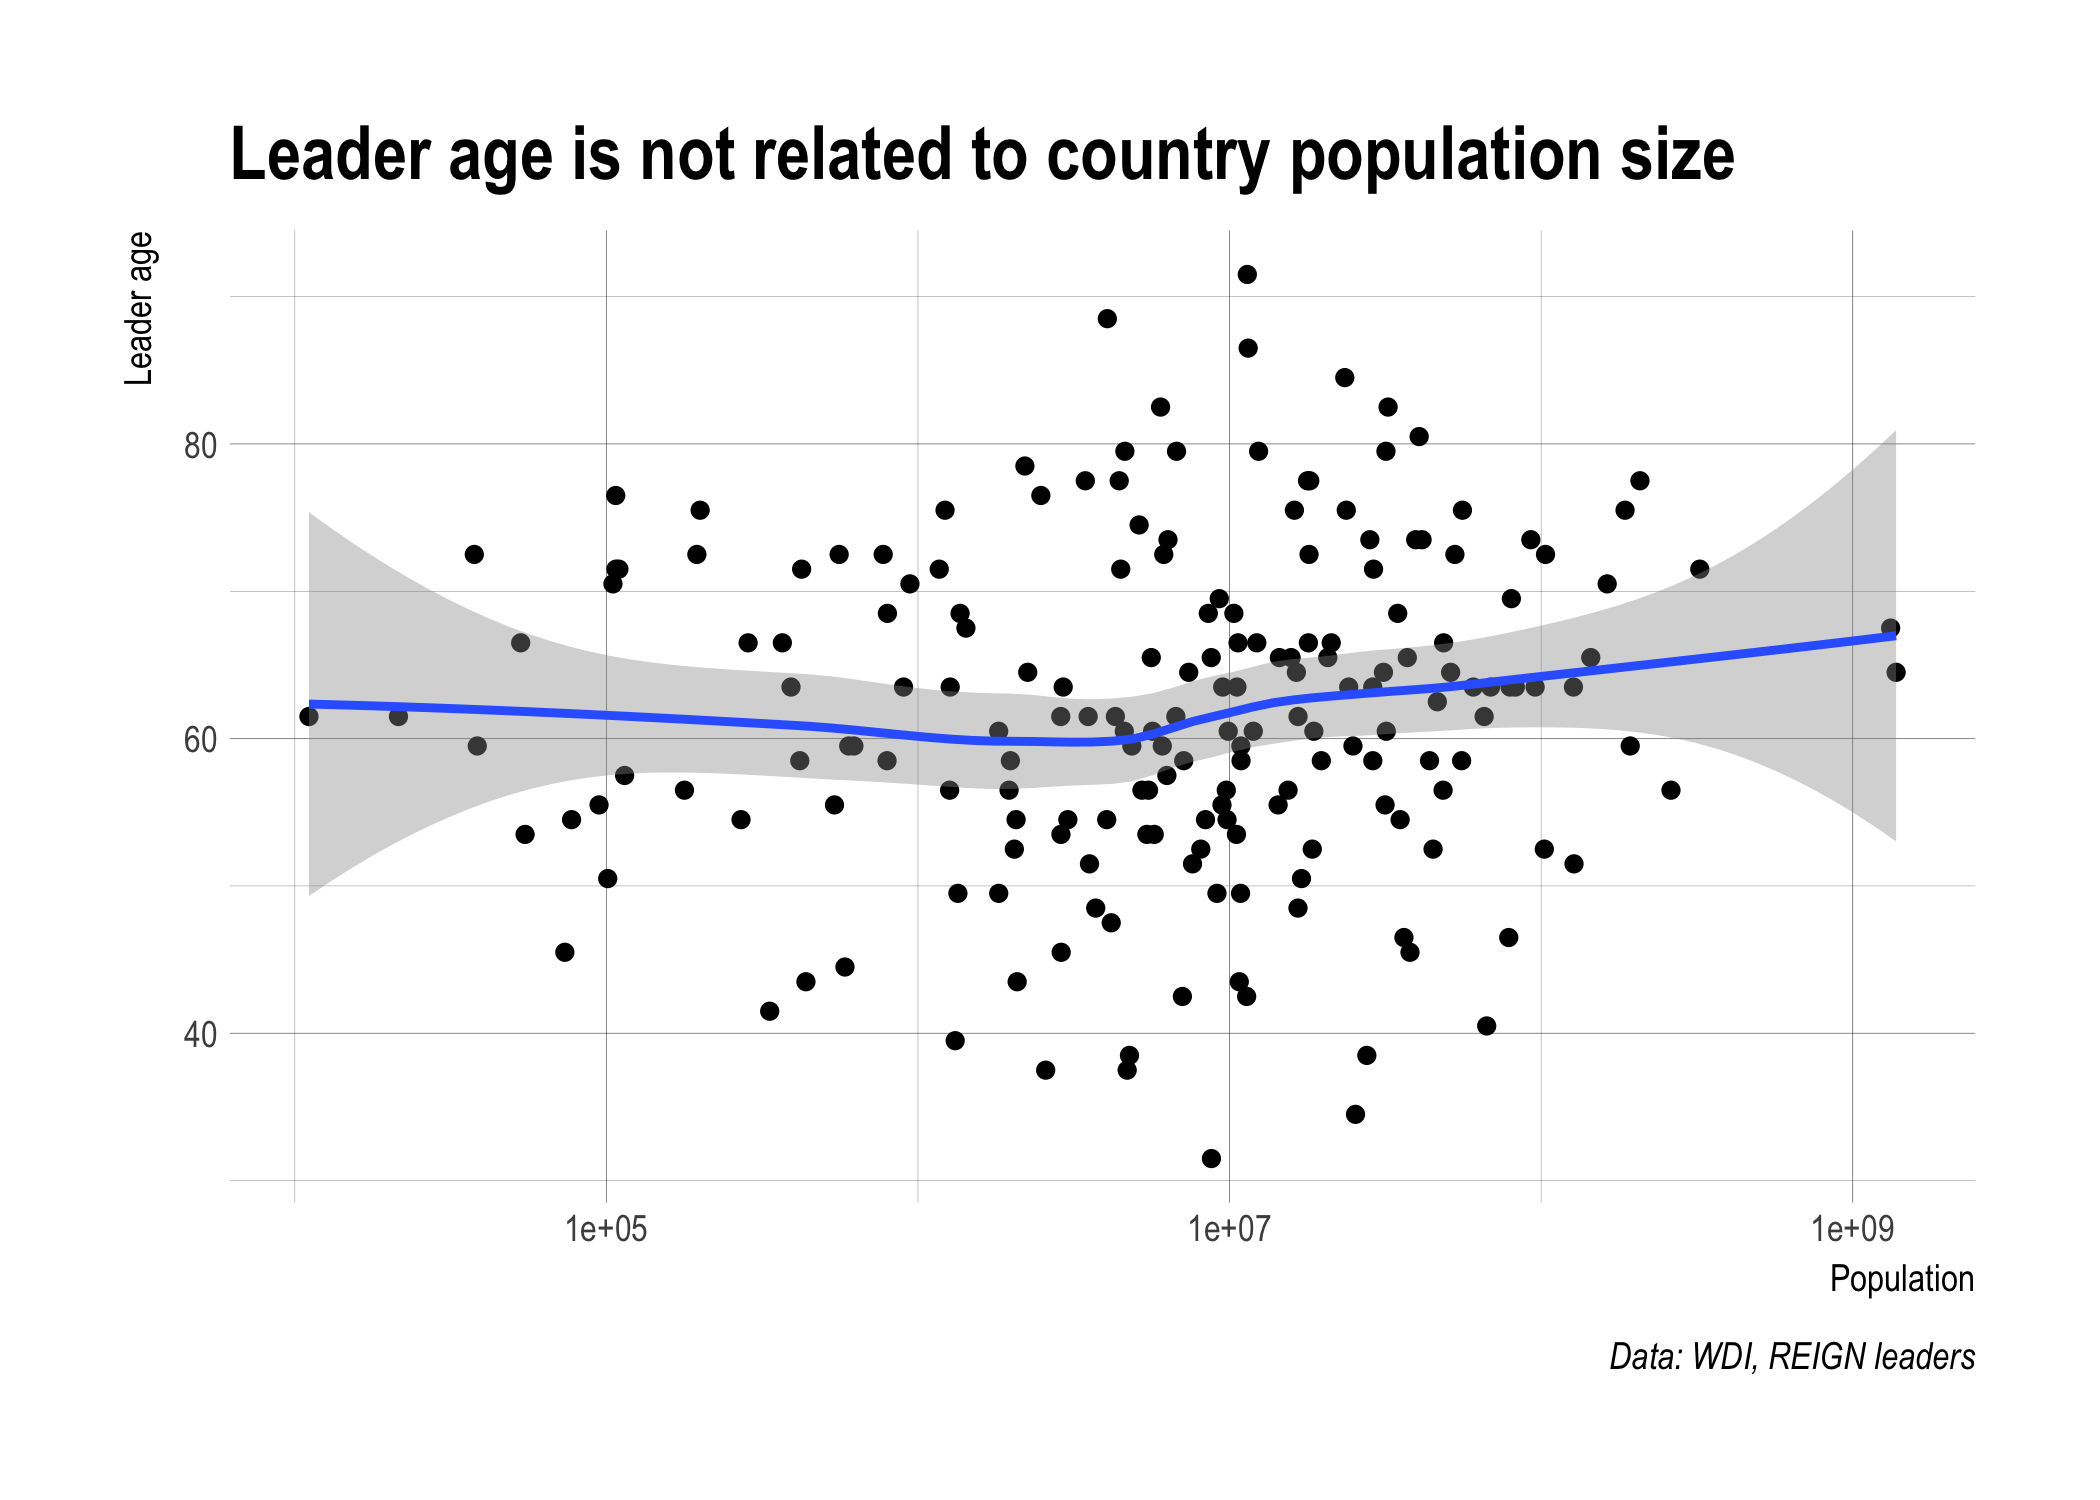 Leader age versus population